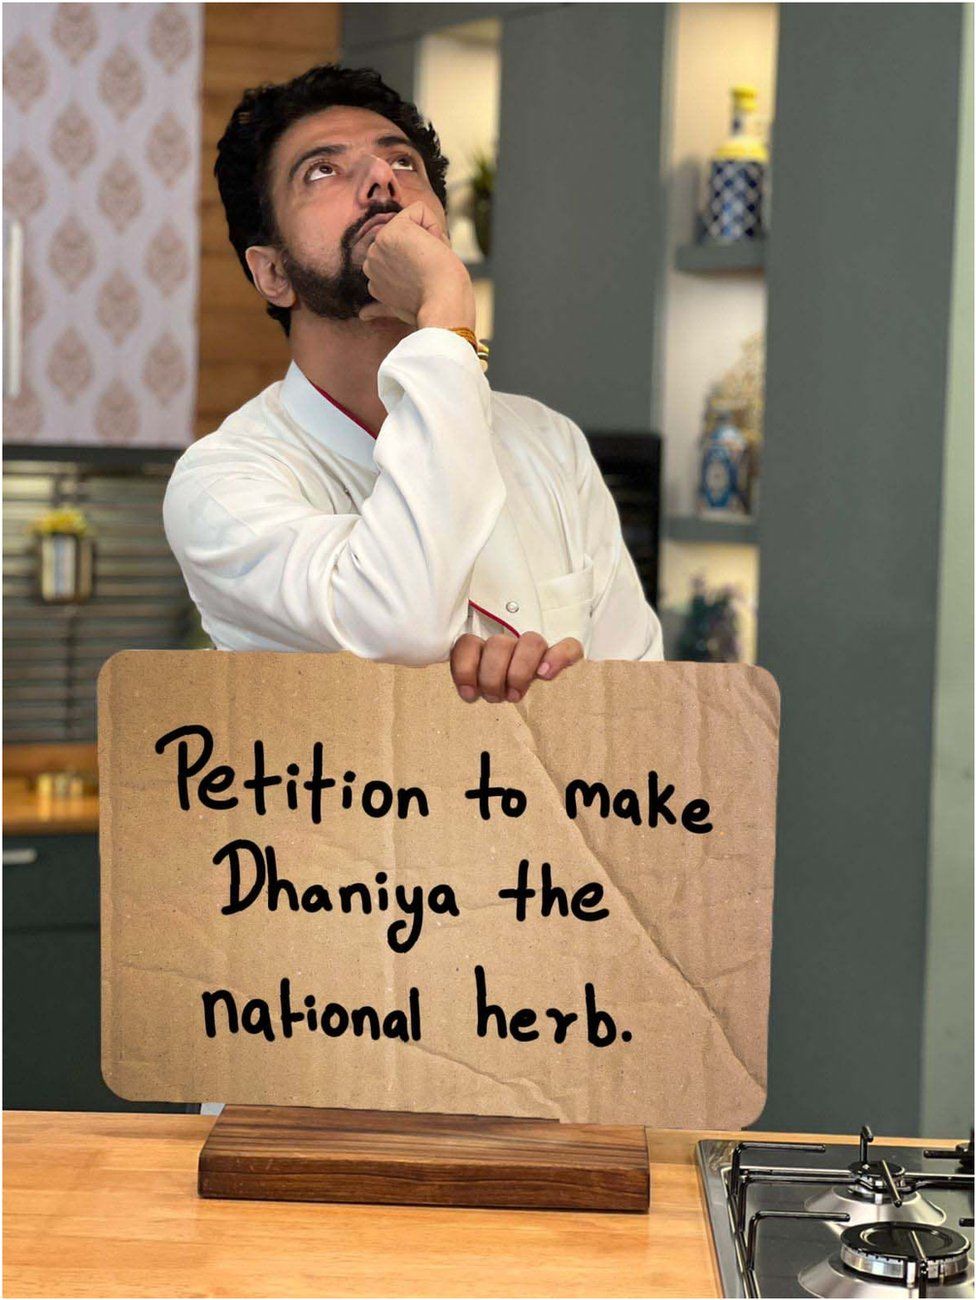 Шеф-повар Ранвир Брар со своей петицией